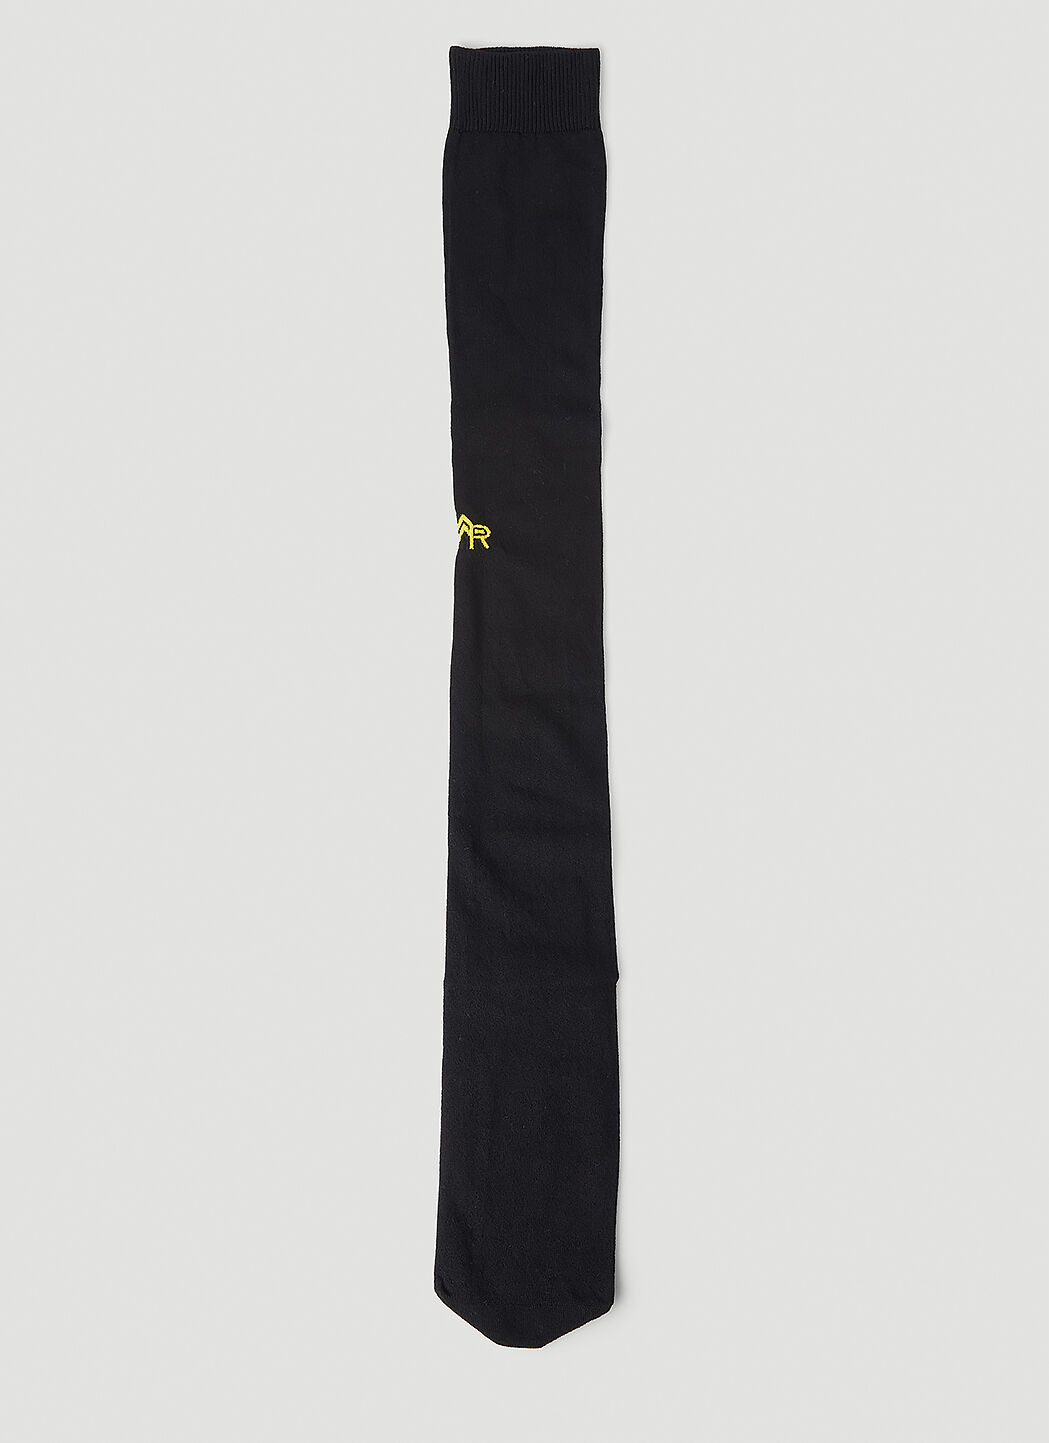 Carne Bollente Logo Embroidered Long Socks Black cbn0356011